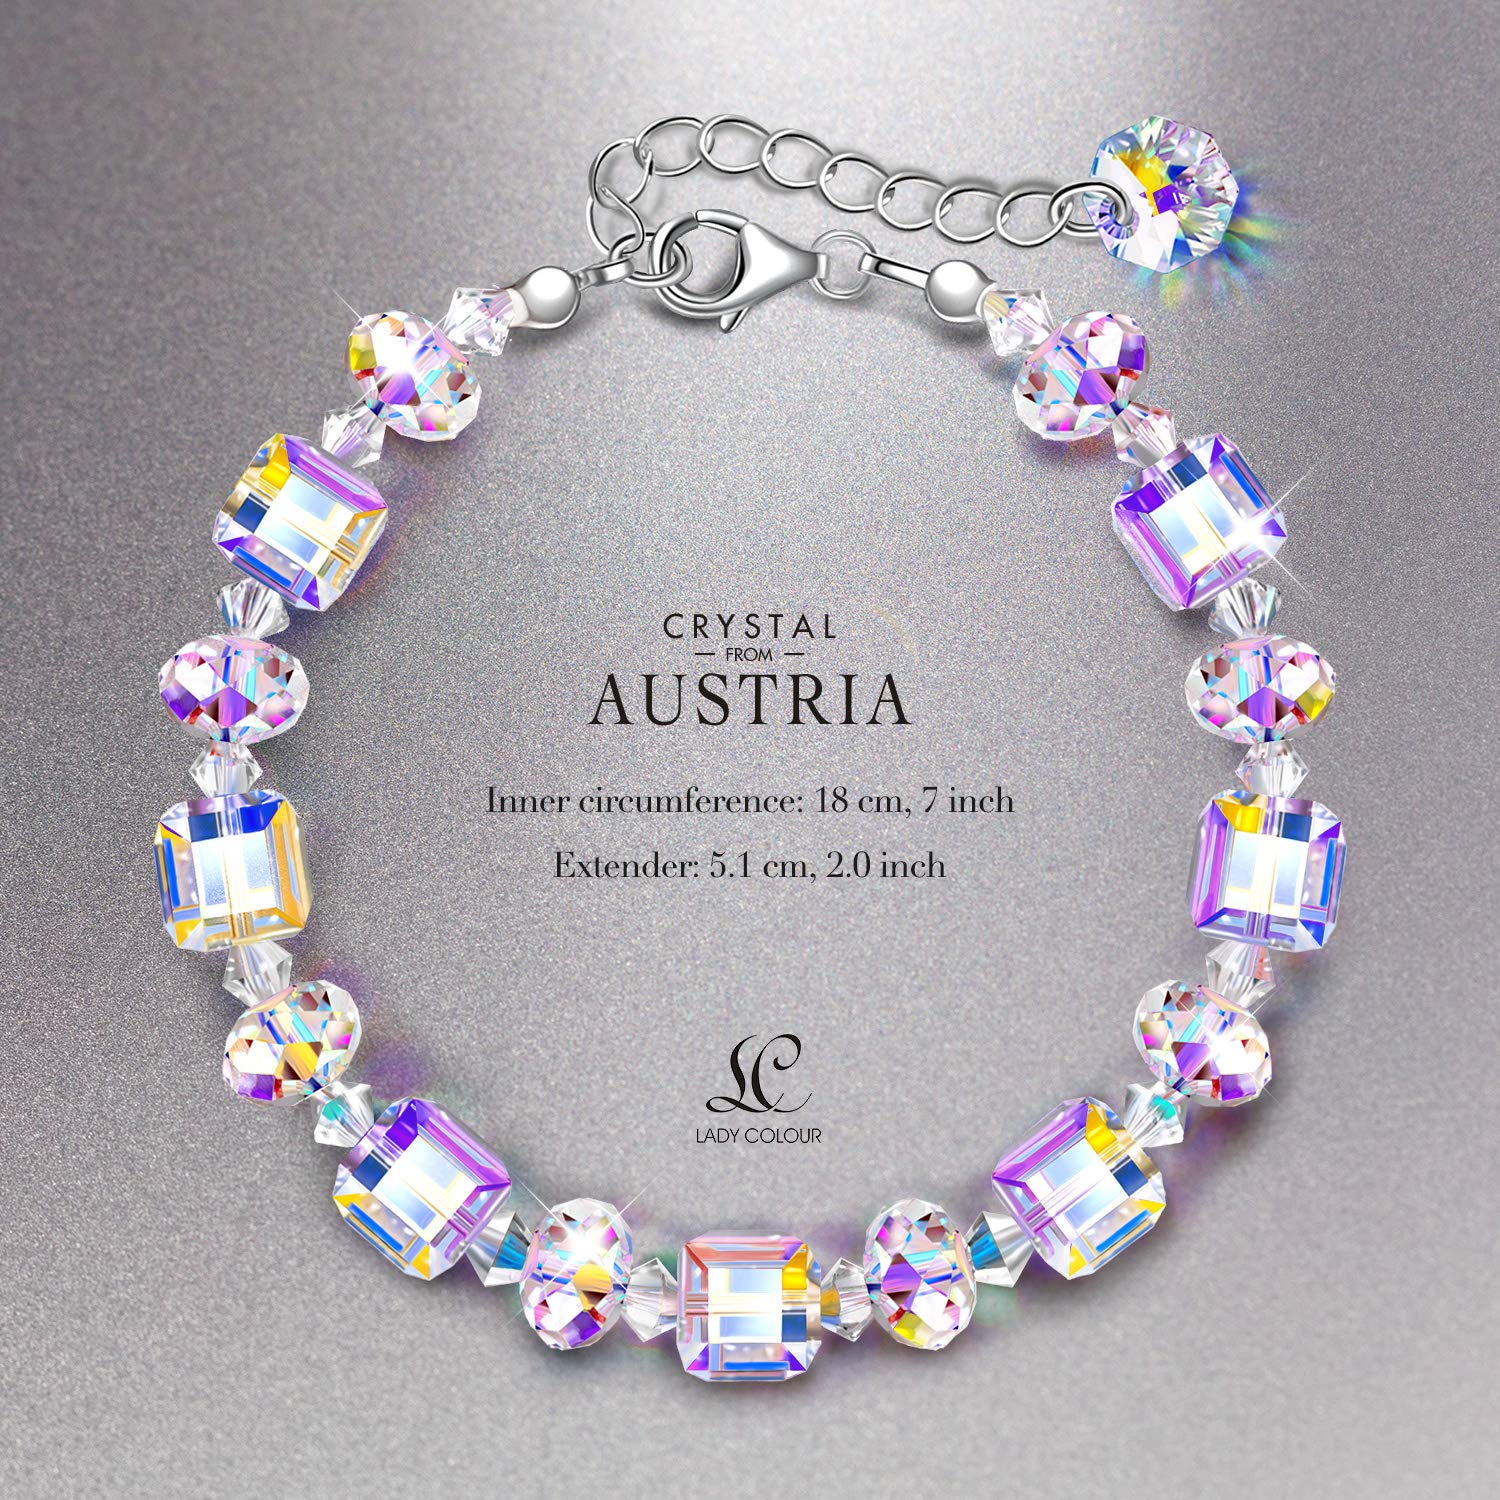 LADY COLOUR ♥ A Little Romance ♥ Sterling Silver Bracelets for Women Northern Lights Crystals Bracelet 7